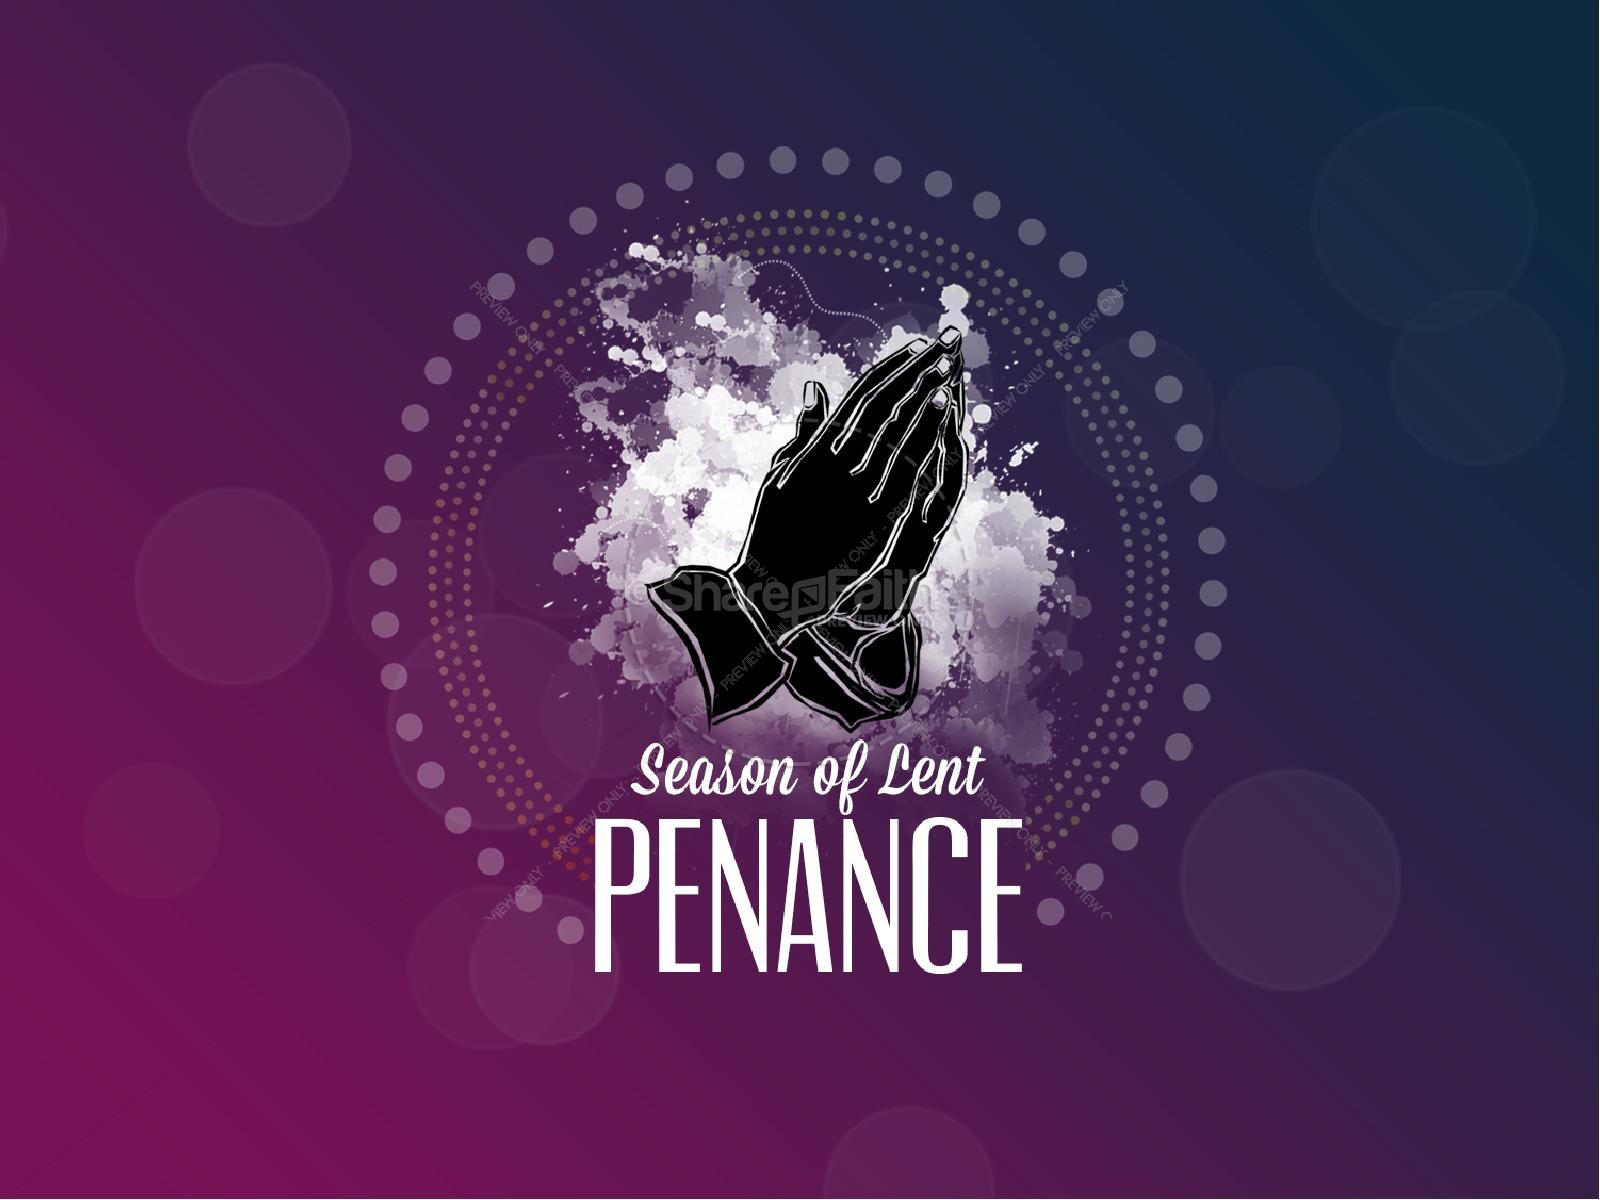 Season of Lent Penance